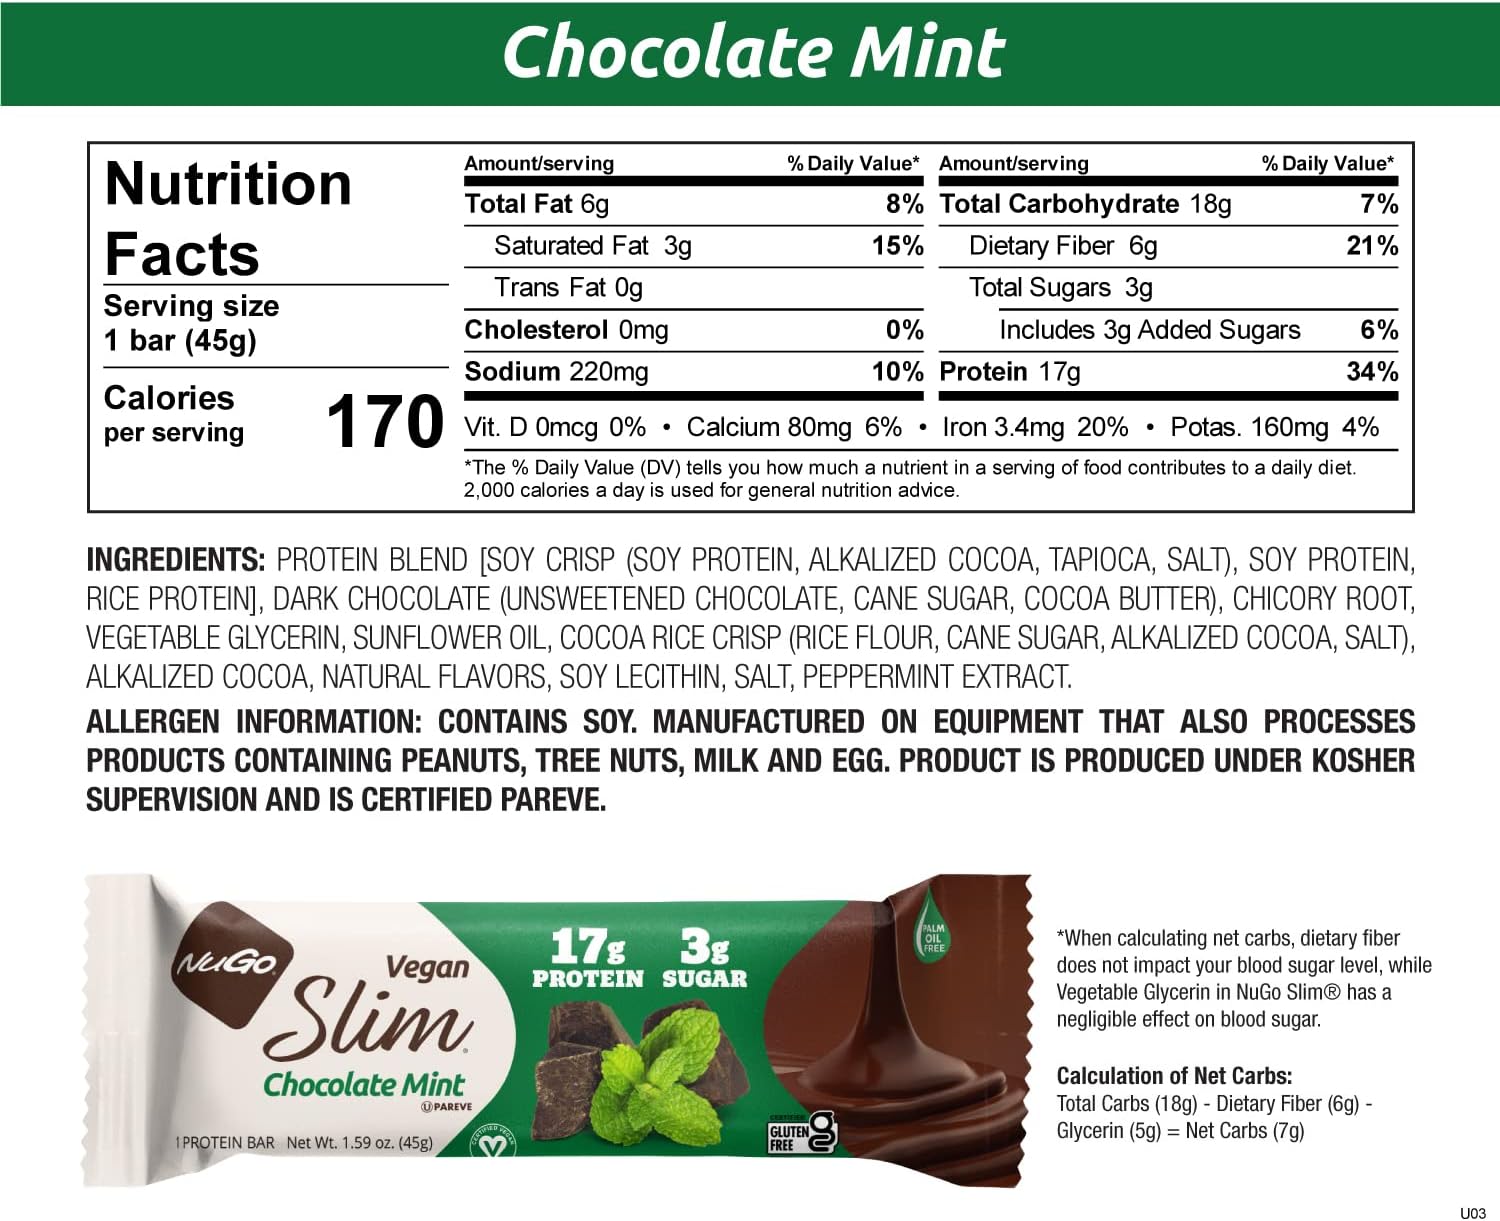 Nugo Slim Dark Chocolate Mint, 18g Vegan Protein, 3g Sugar, 6g Fiber, 